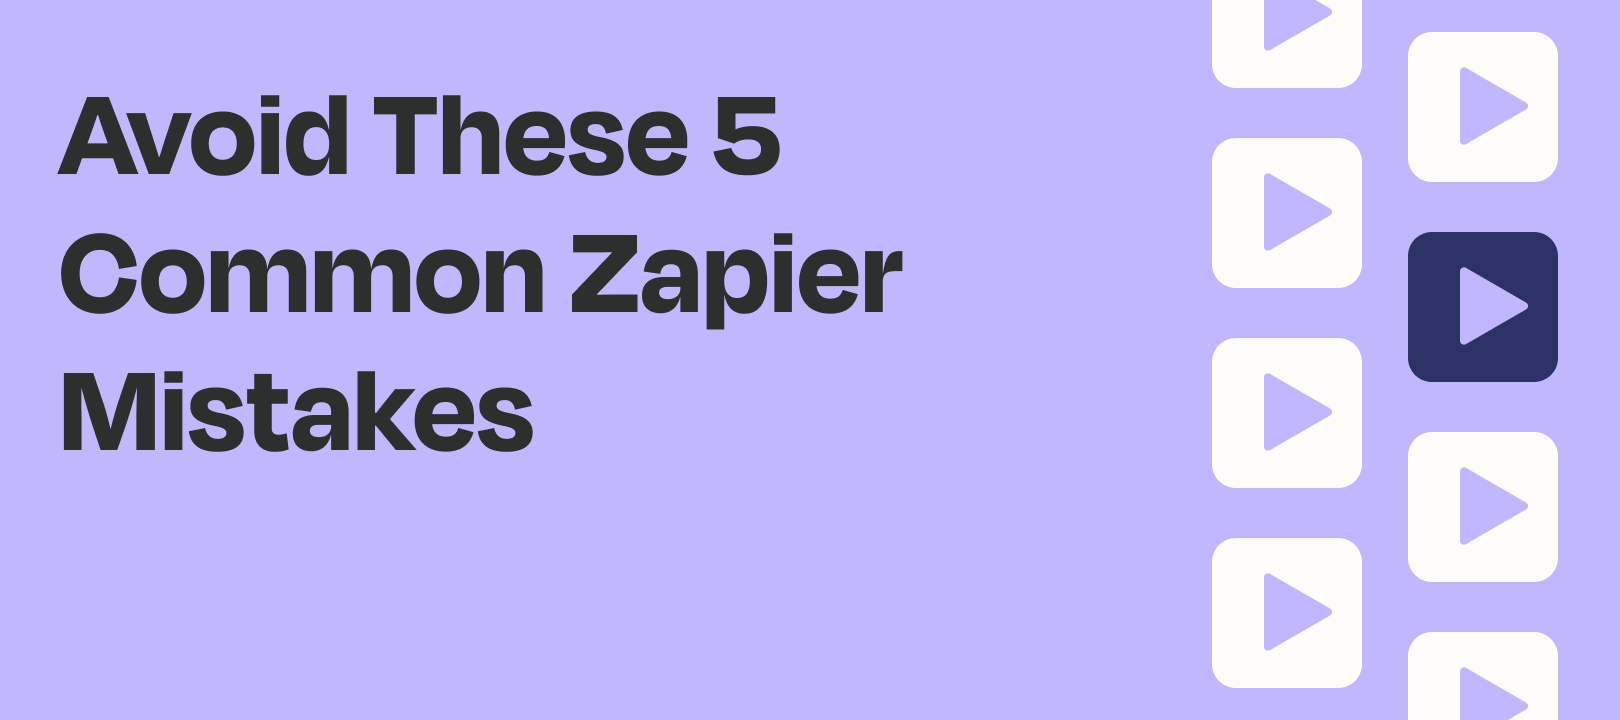 5 Common Mistakes to Avoid when Using Zapier